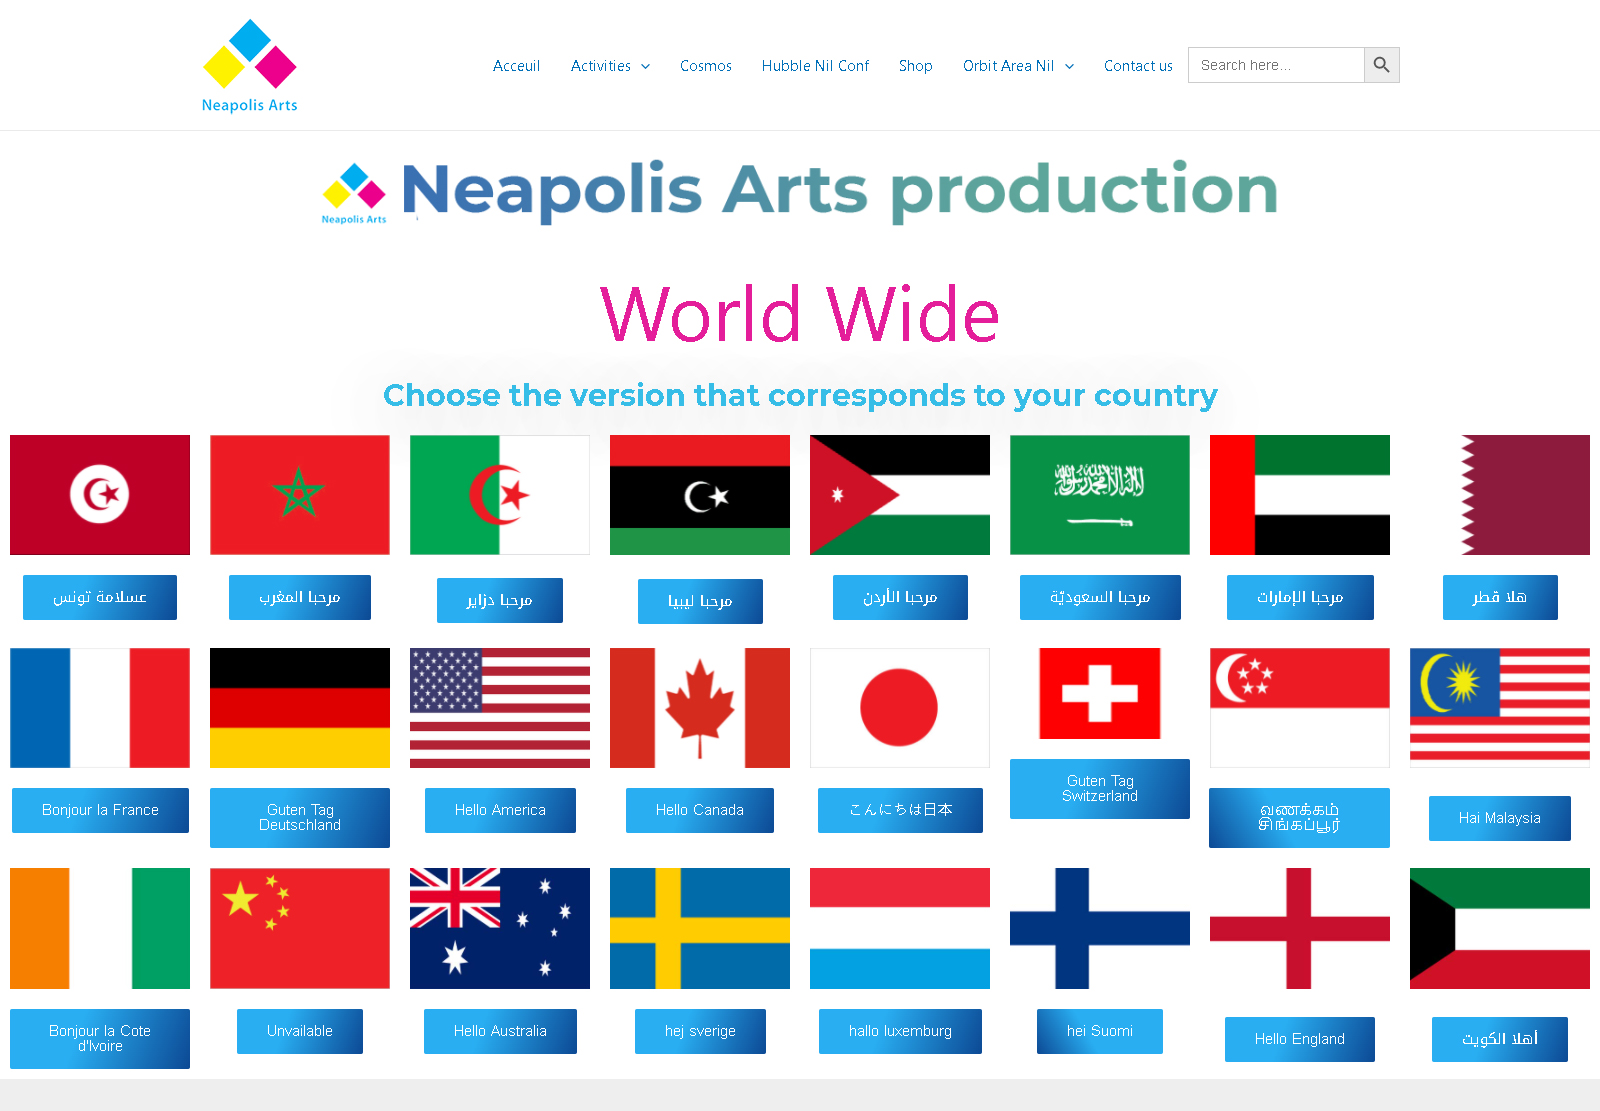 neapolisarts-neapolis-arts-world-wide.jpg